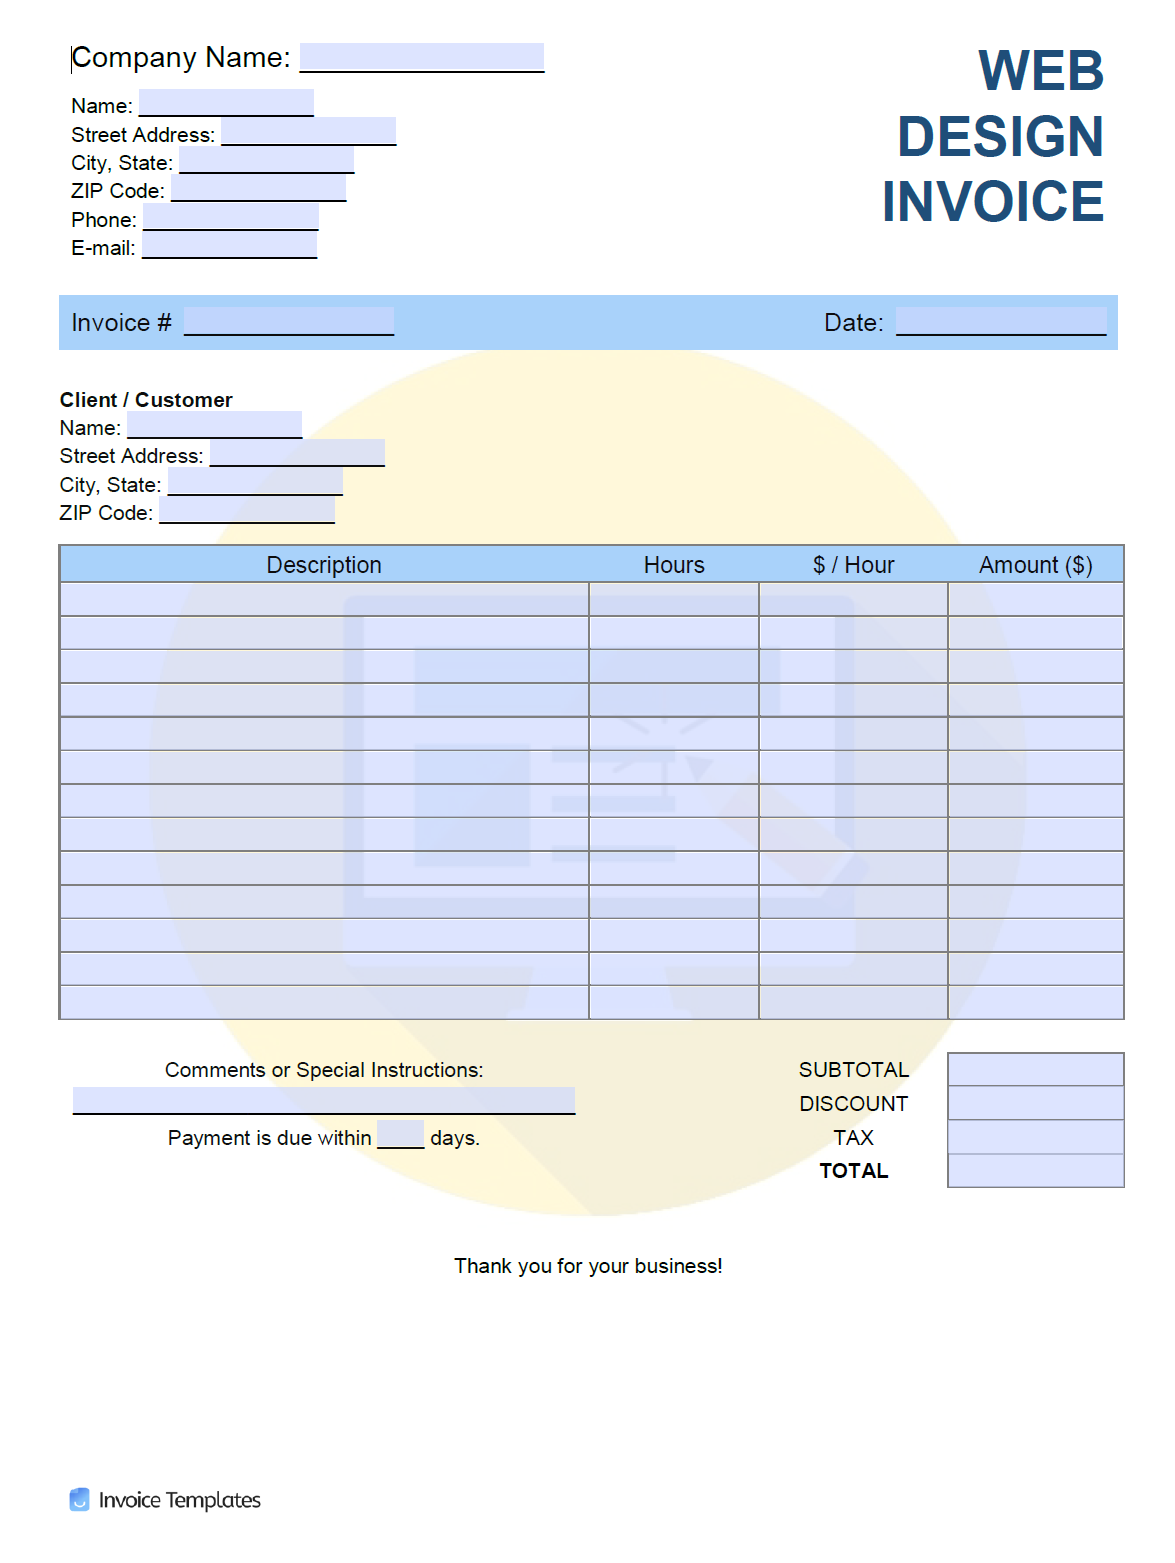 Free Web Design Invoice Template  PDF  WORD  EXCEL Pertaining To Web Design Invoice Template Word